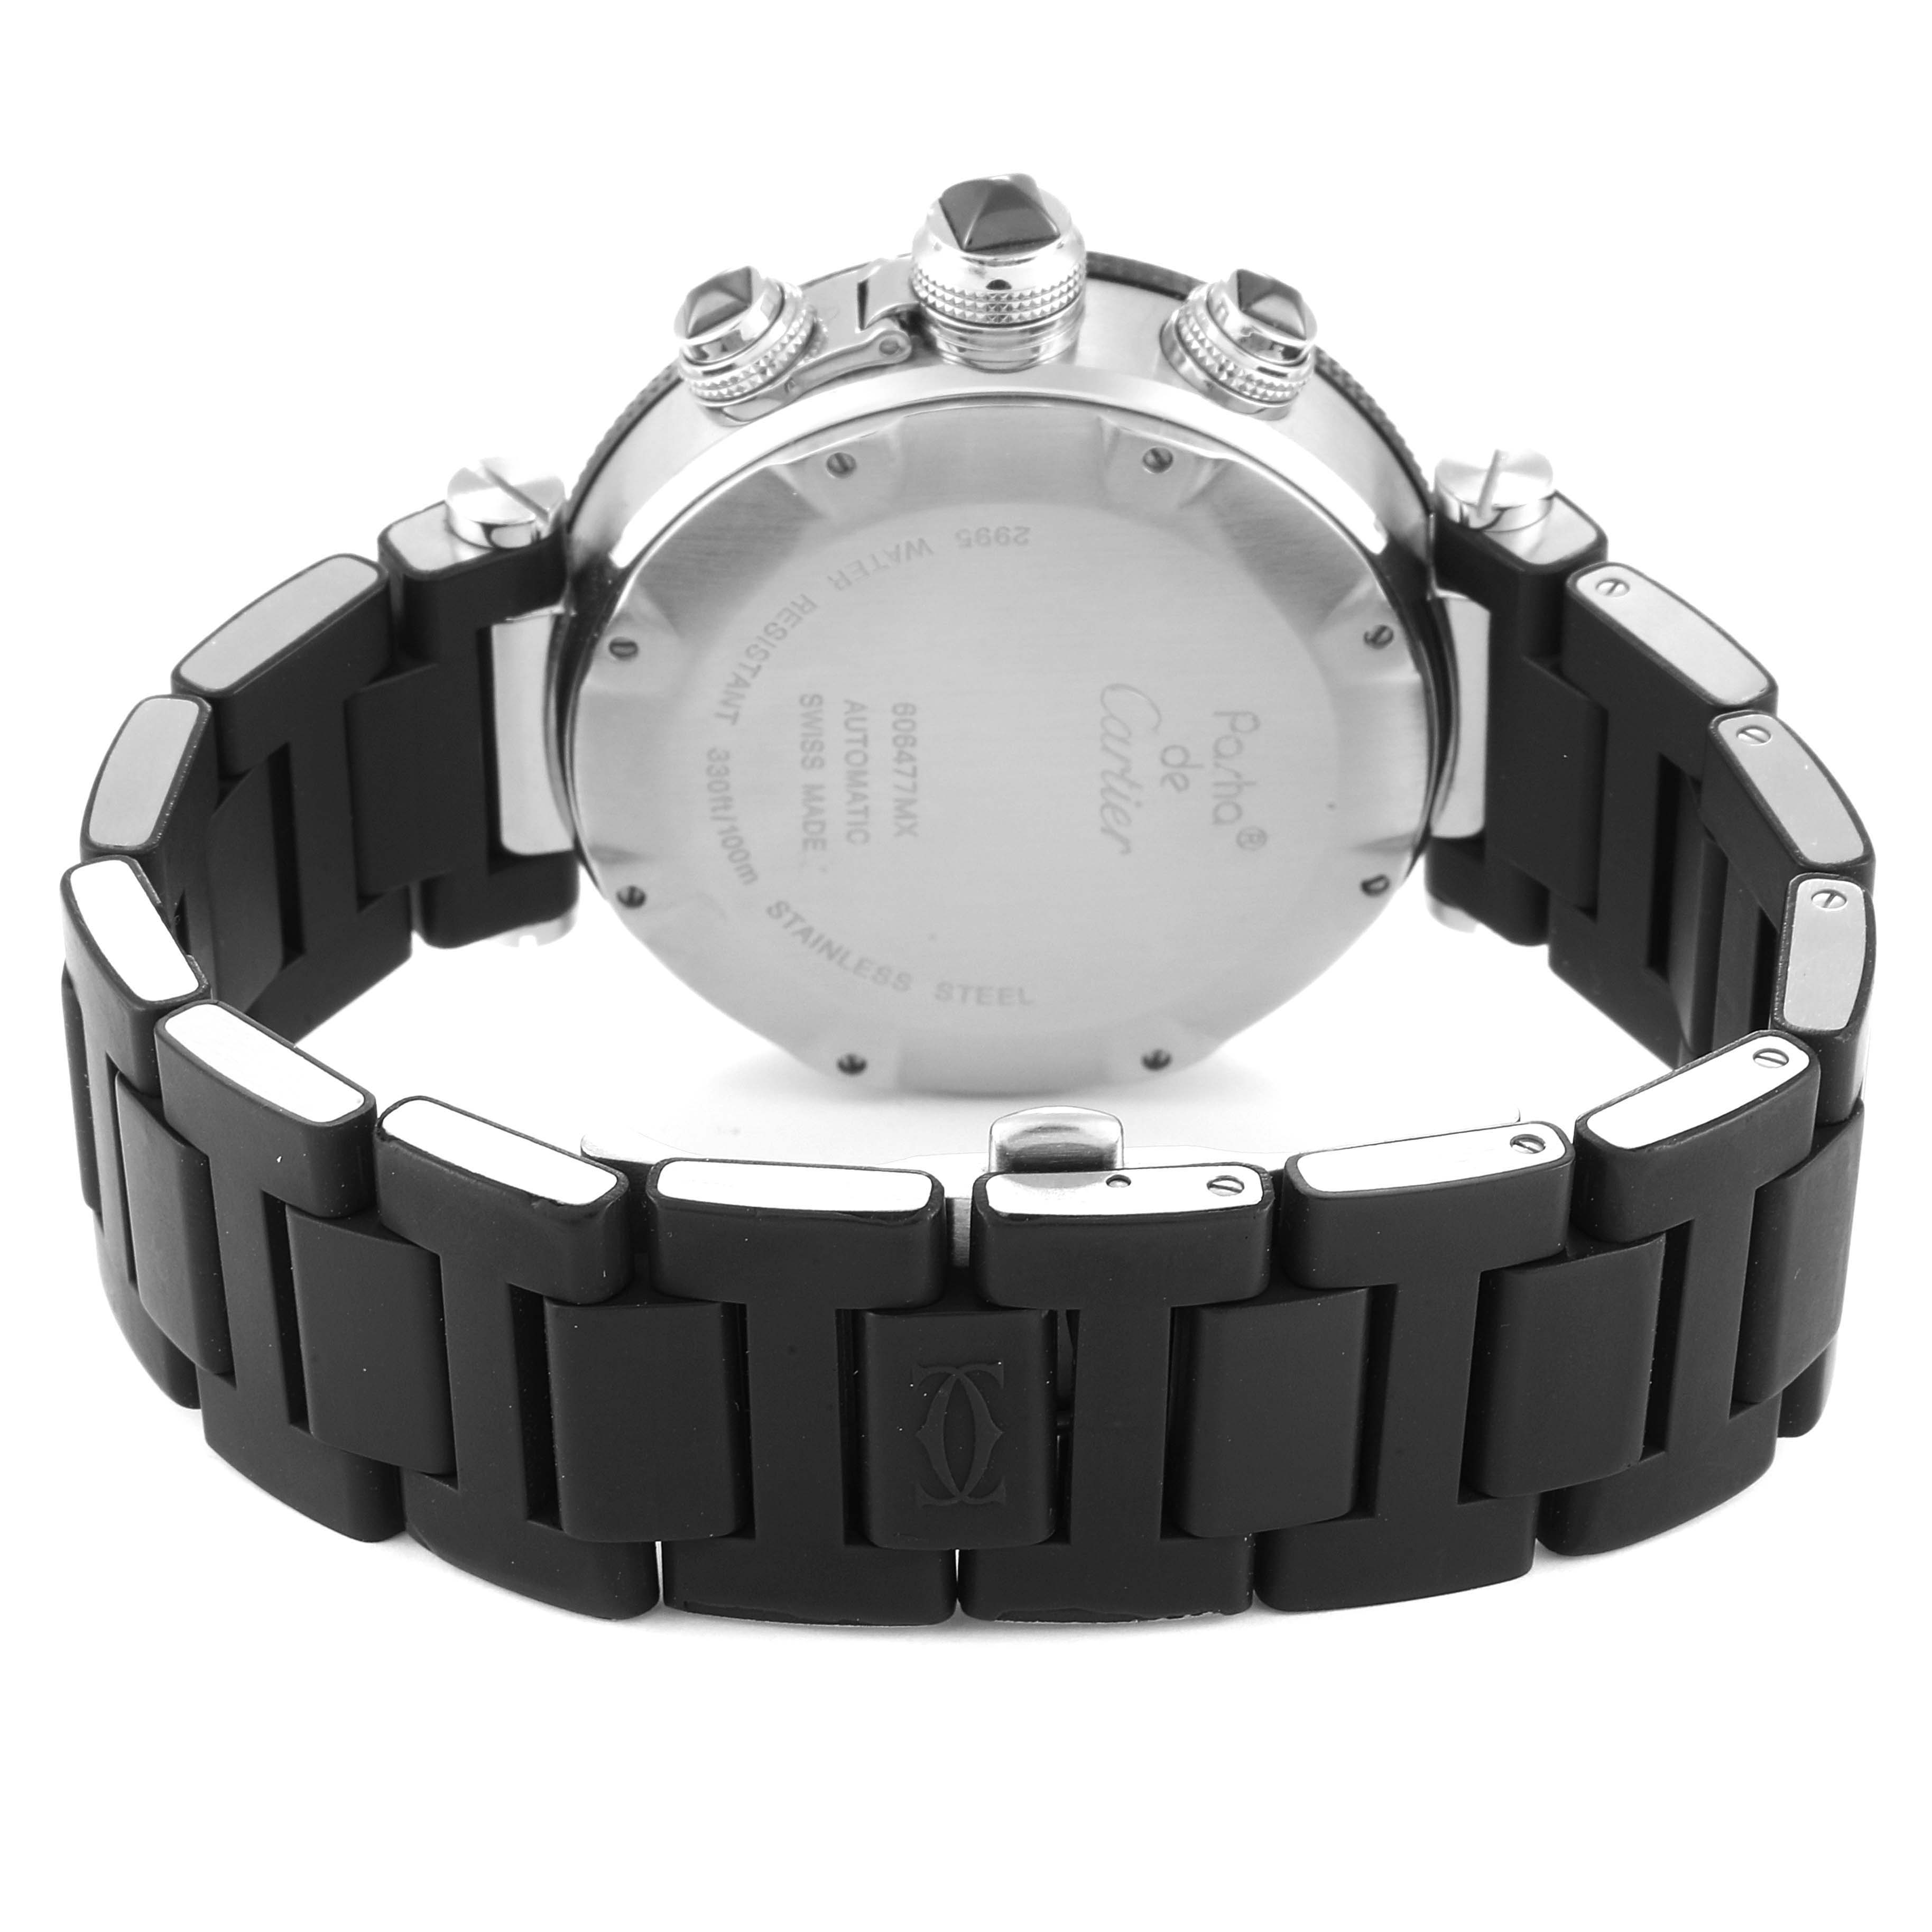 Cartier Pasha Seatimer Chronograph Rubber Strap Watch W31088U2 Box ...